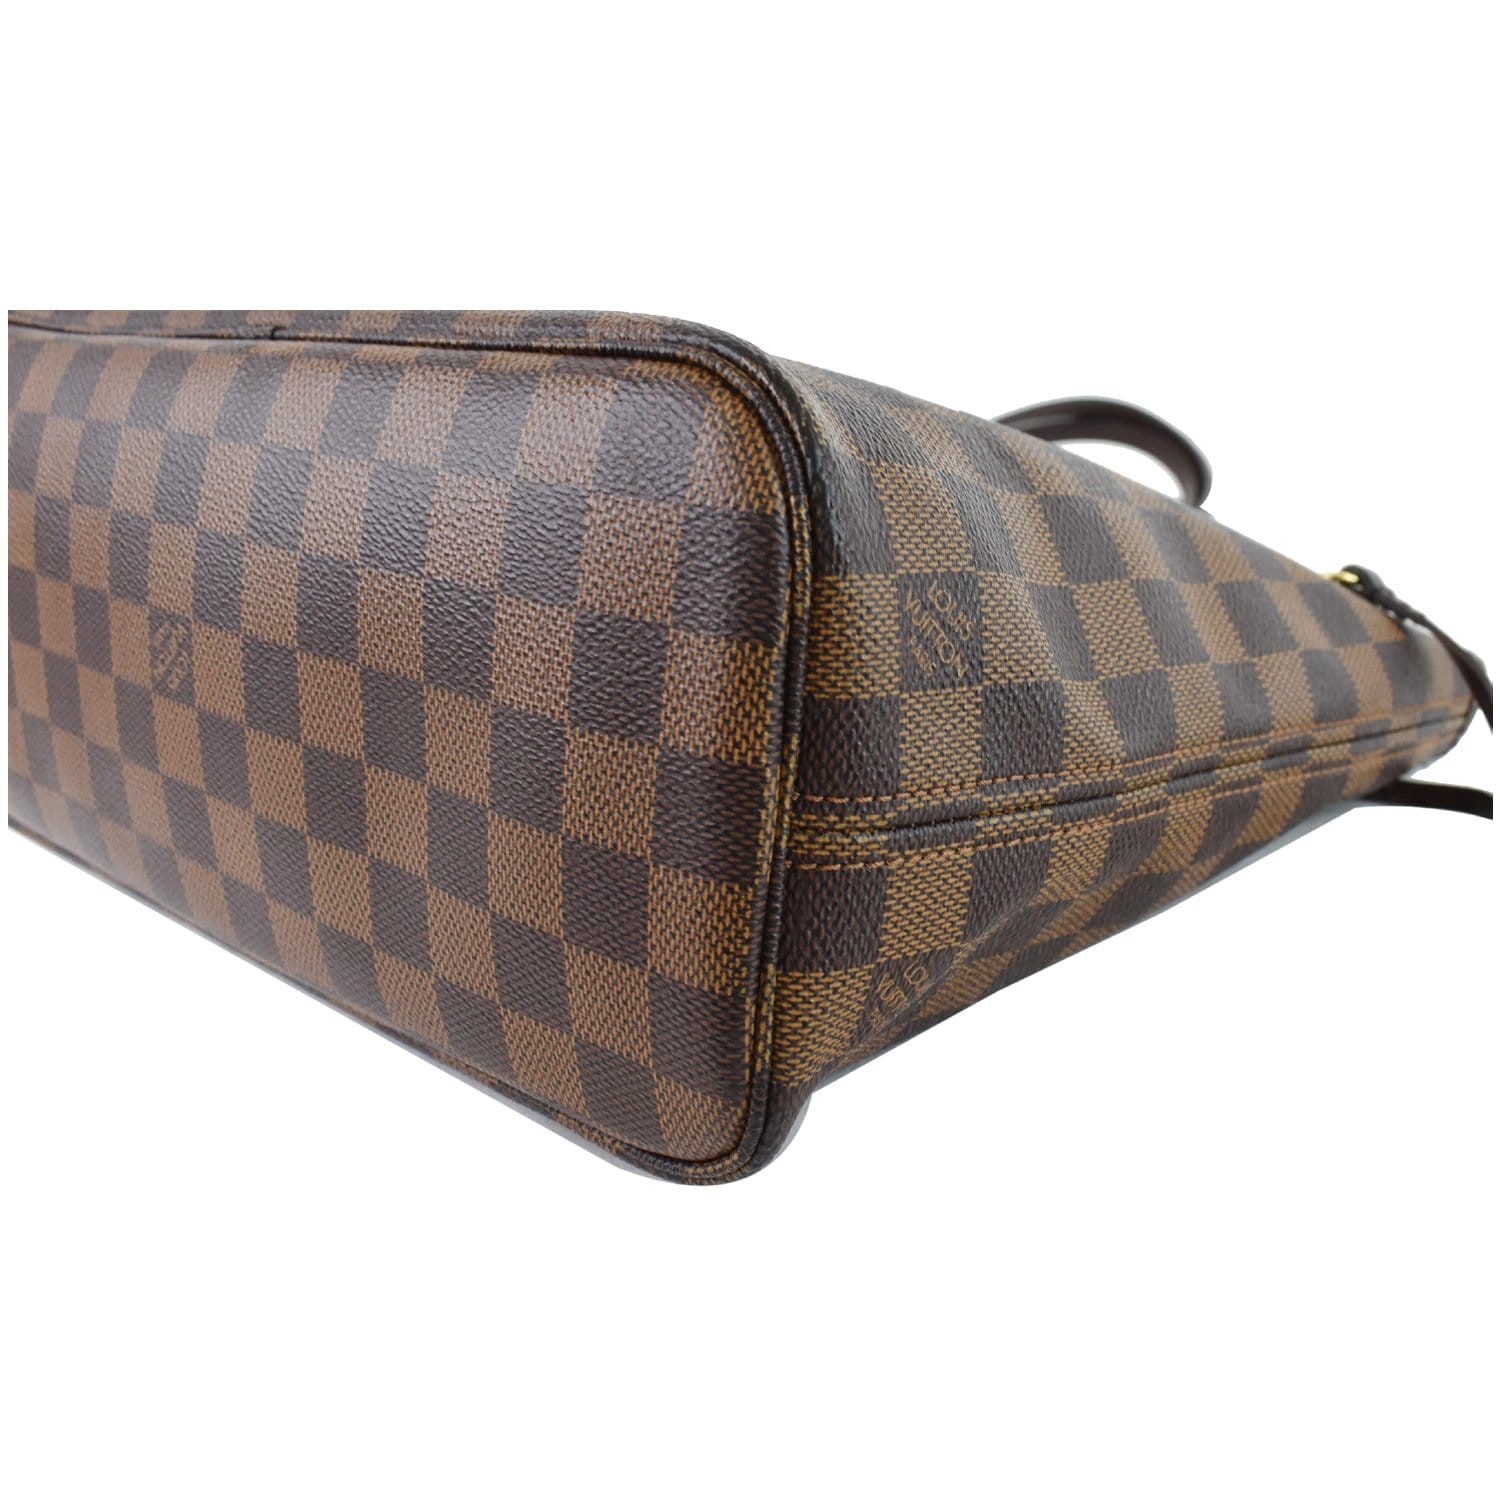 Neverfull PM Damier Ebene in Brown - Handbags N41359, LOUIS VUITTON ®